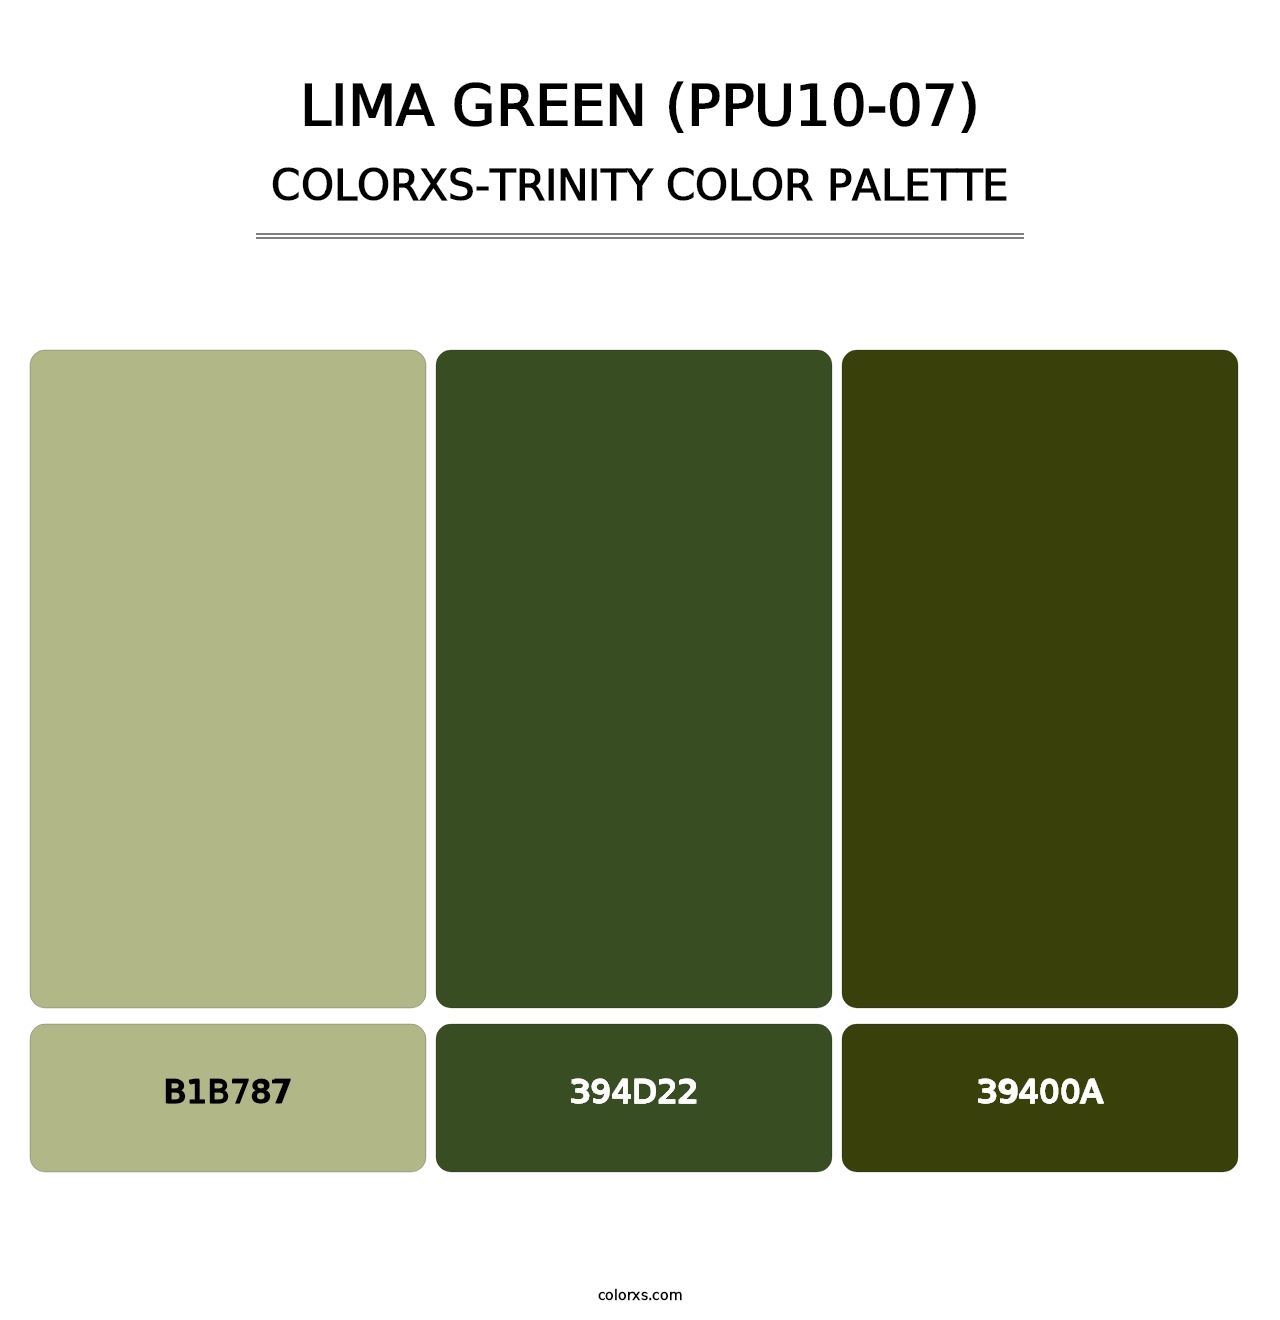 Lima Green (PPU10-07) - Colorxs Trinity Palette